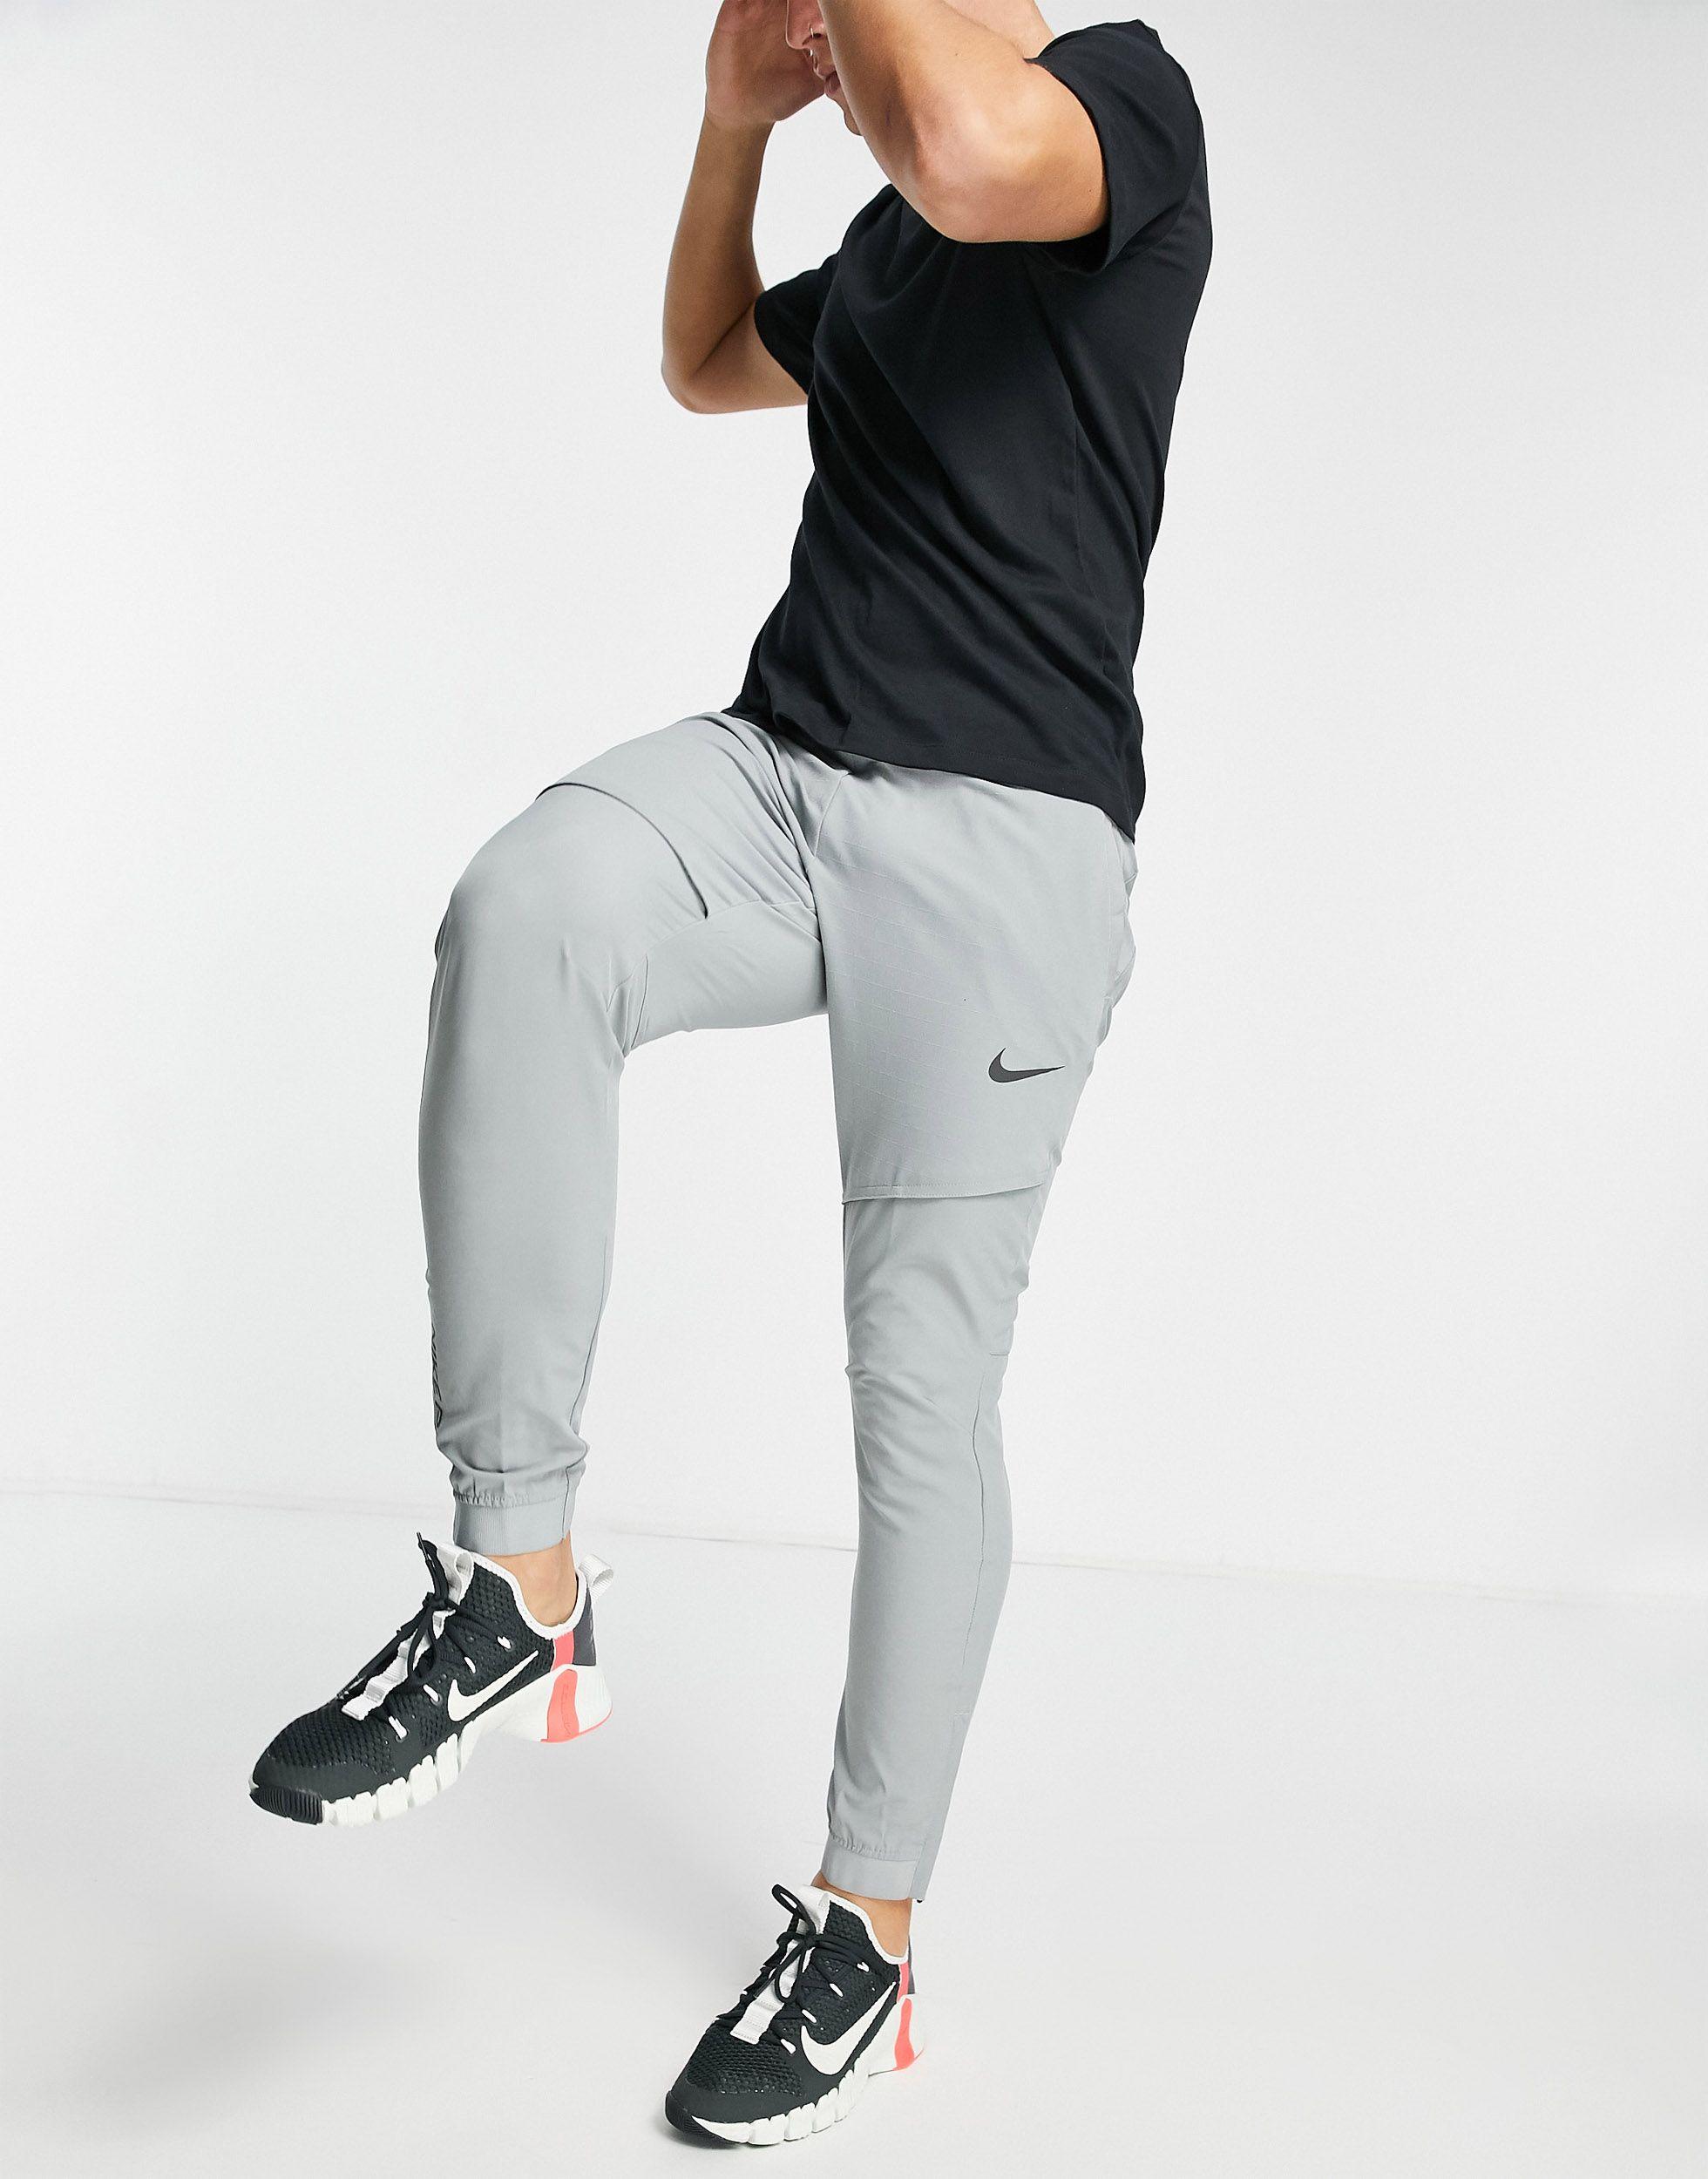 Nike Pro Training Collection Flex Rep Joggers In Black Denmark, SAVE 39% -  loutzenhiserfuneralhomes.com